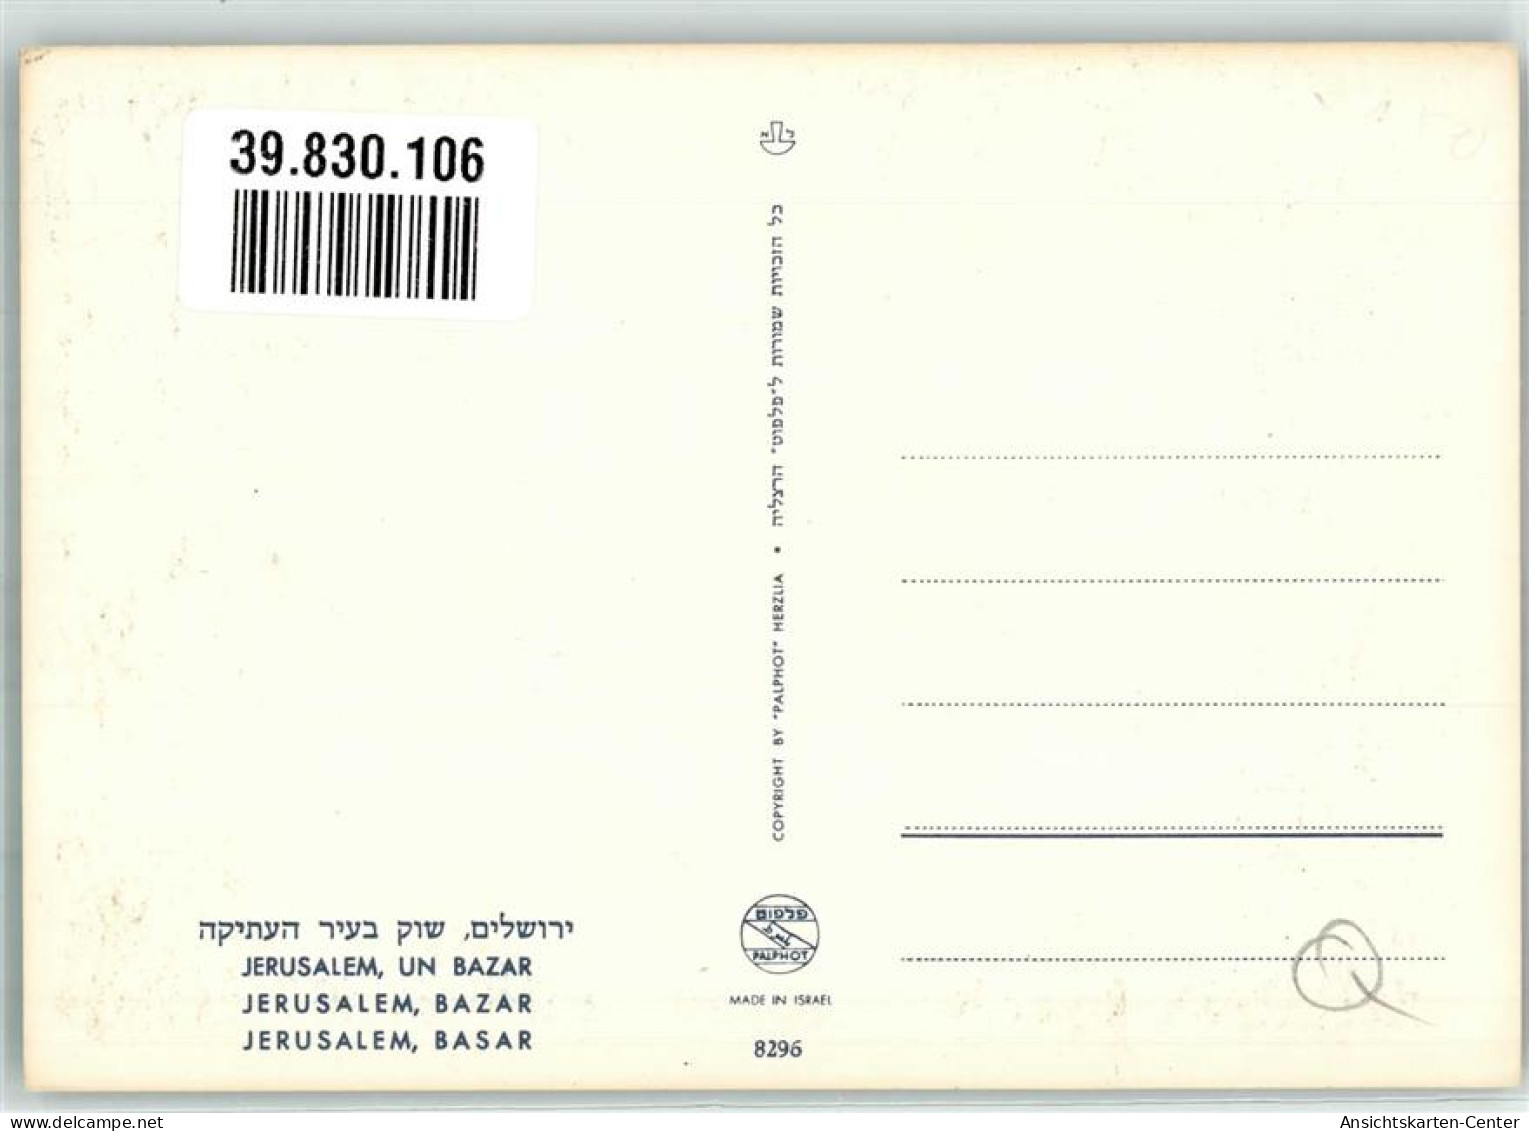 39830106 - Jerusalem - Israel